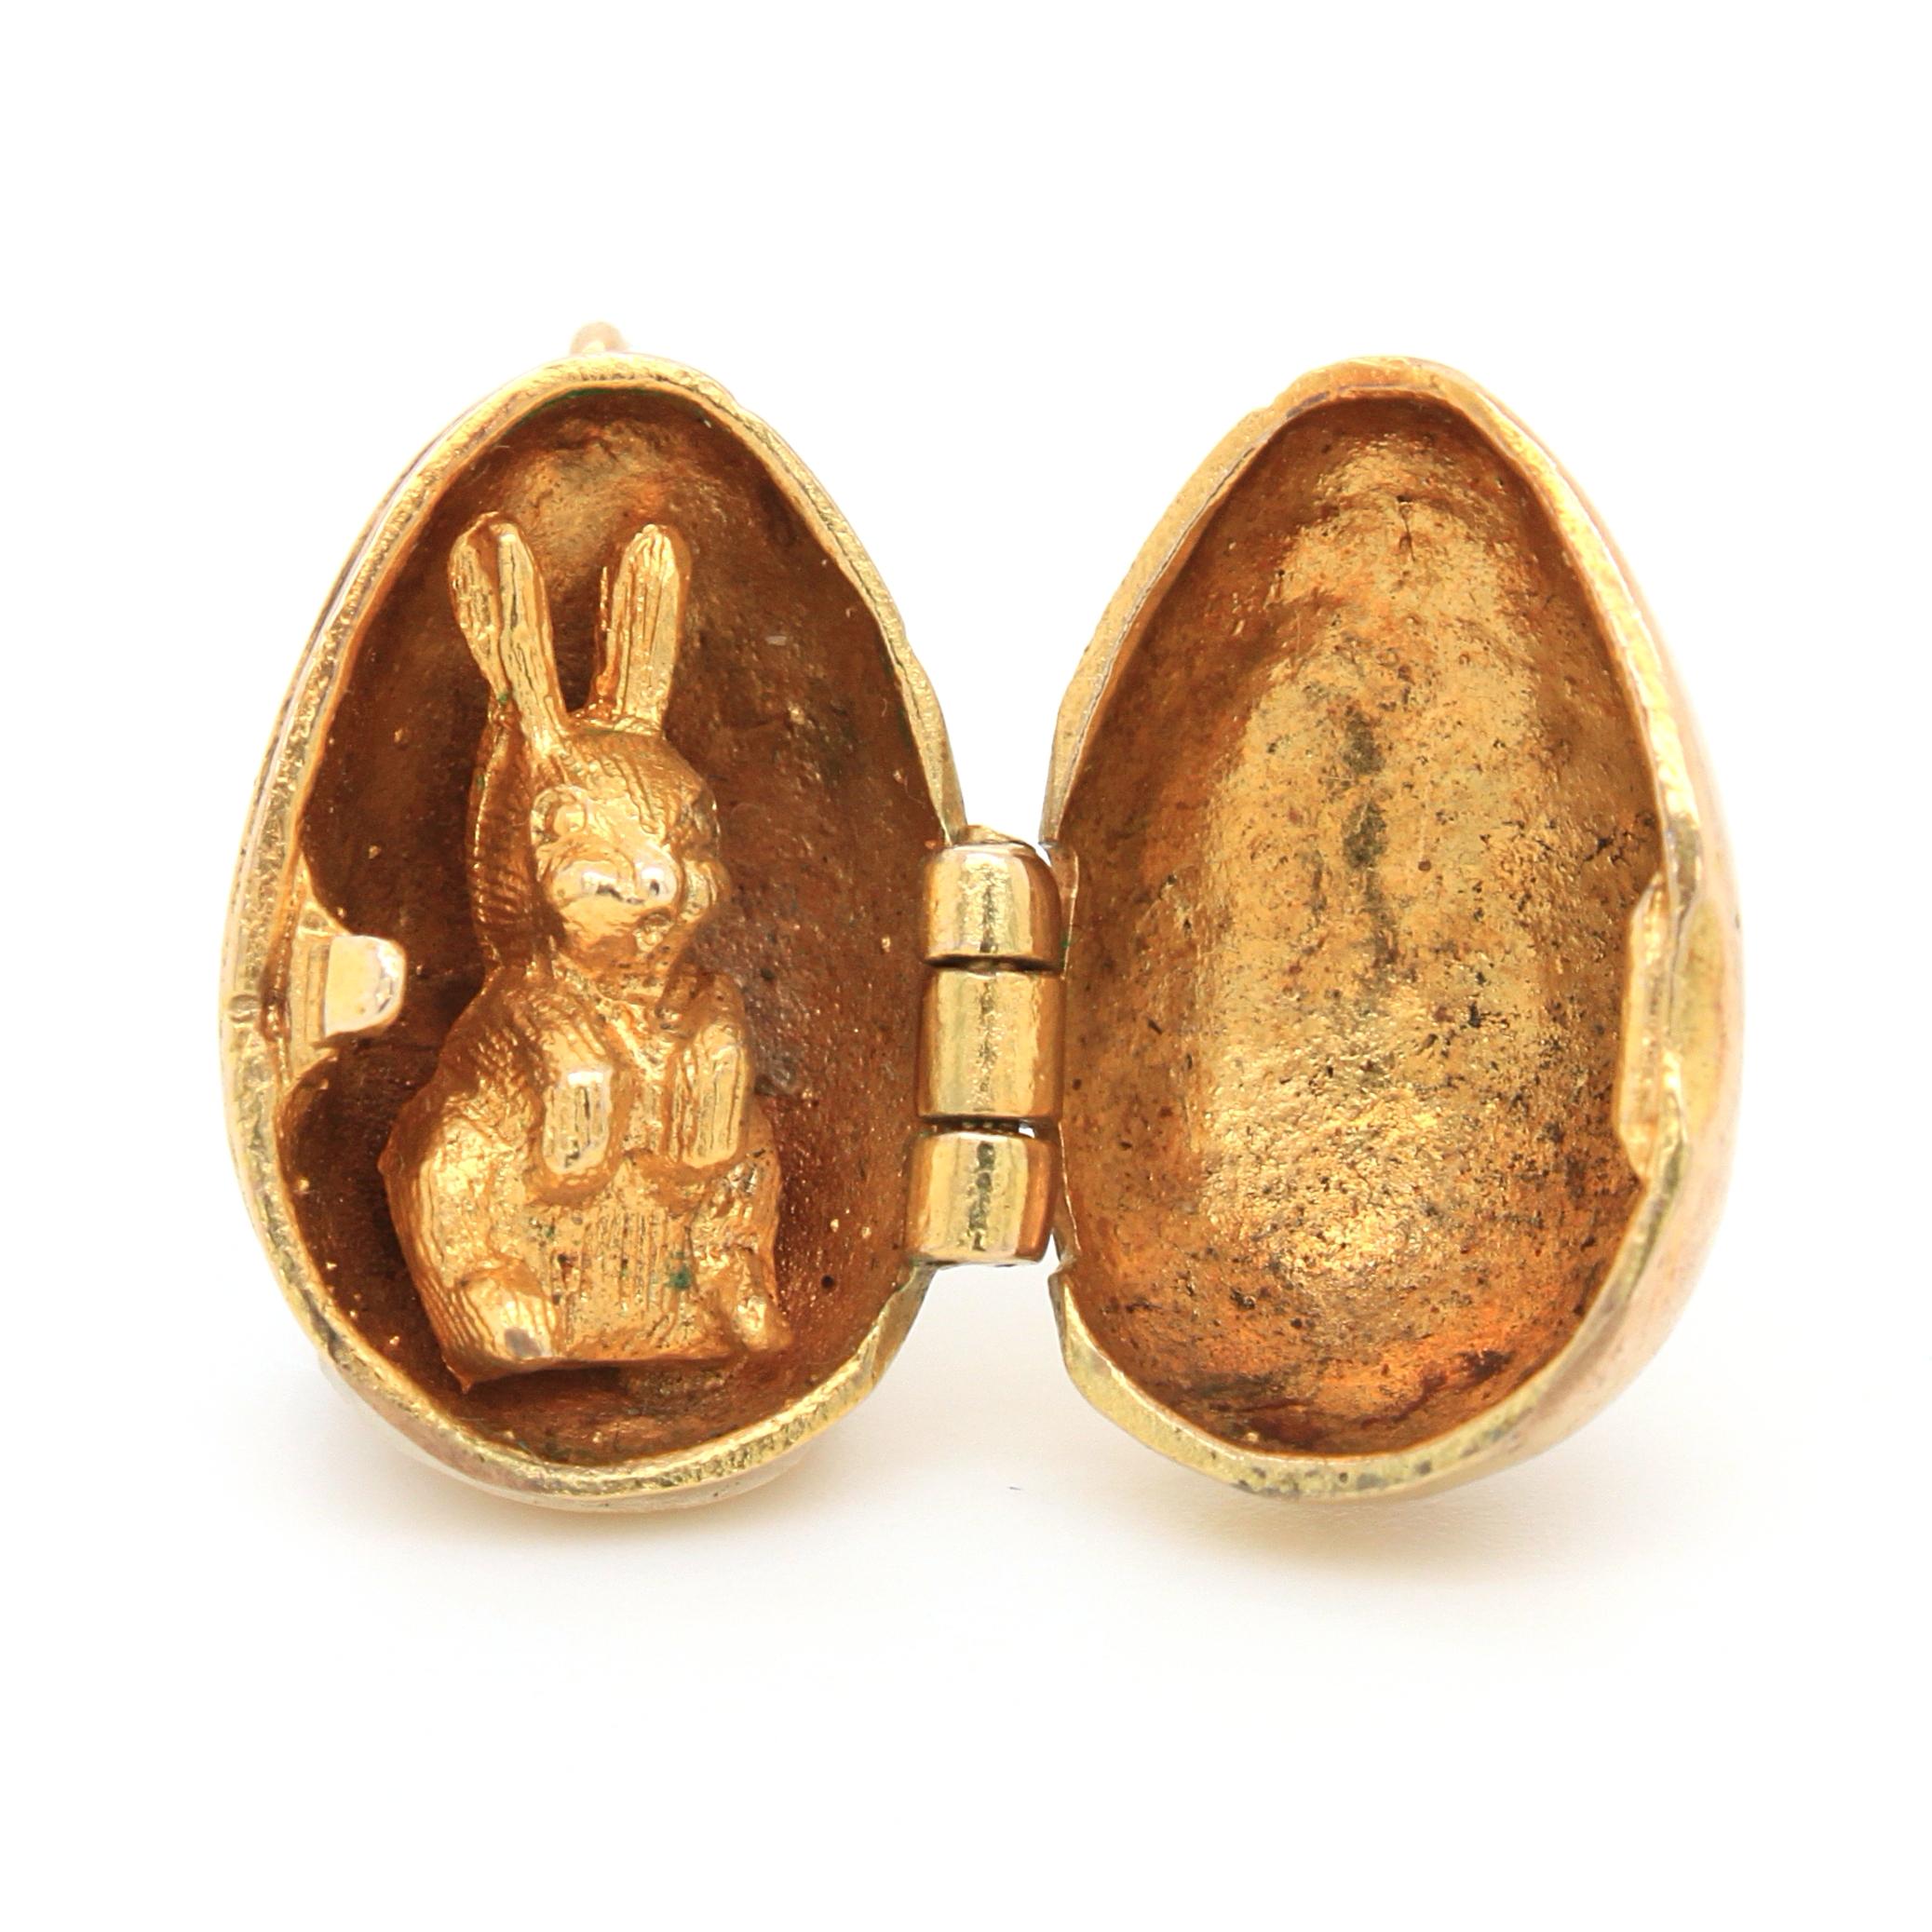 Women's or Men's Golden Egg with Rabbit Pendant, circa 1900